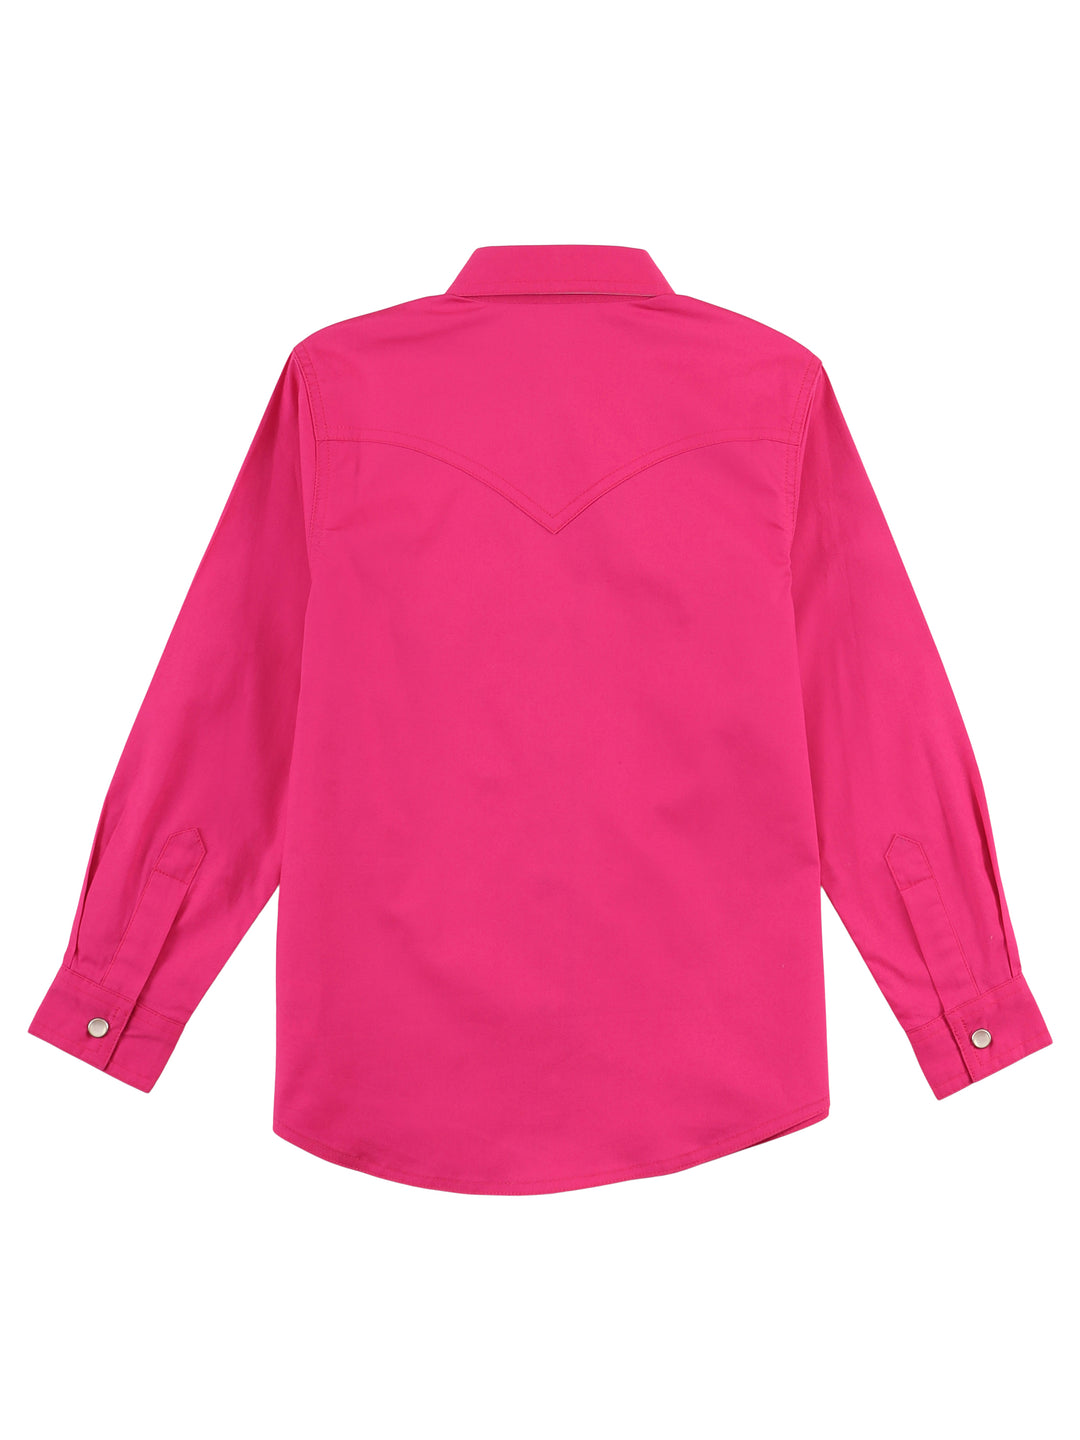 Wrangler Girl's Pink Western Snap Shirt